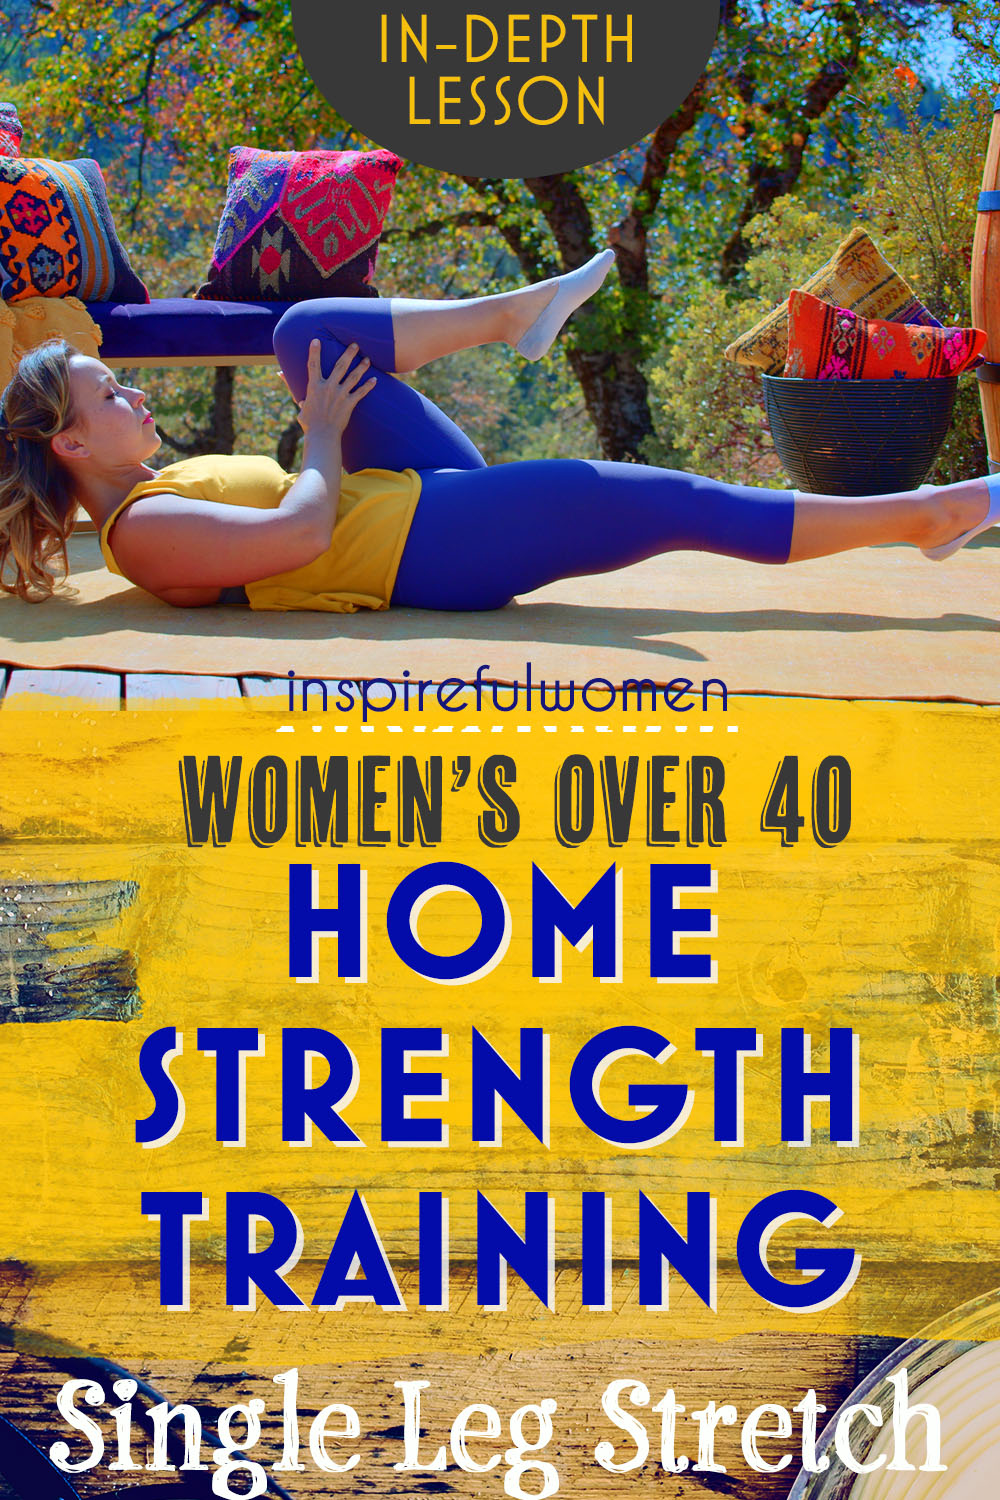 single-leg-stretch-pilates-core-exercise-neutral-spine-proper-form-women-40+